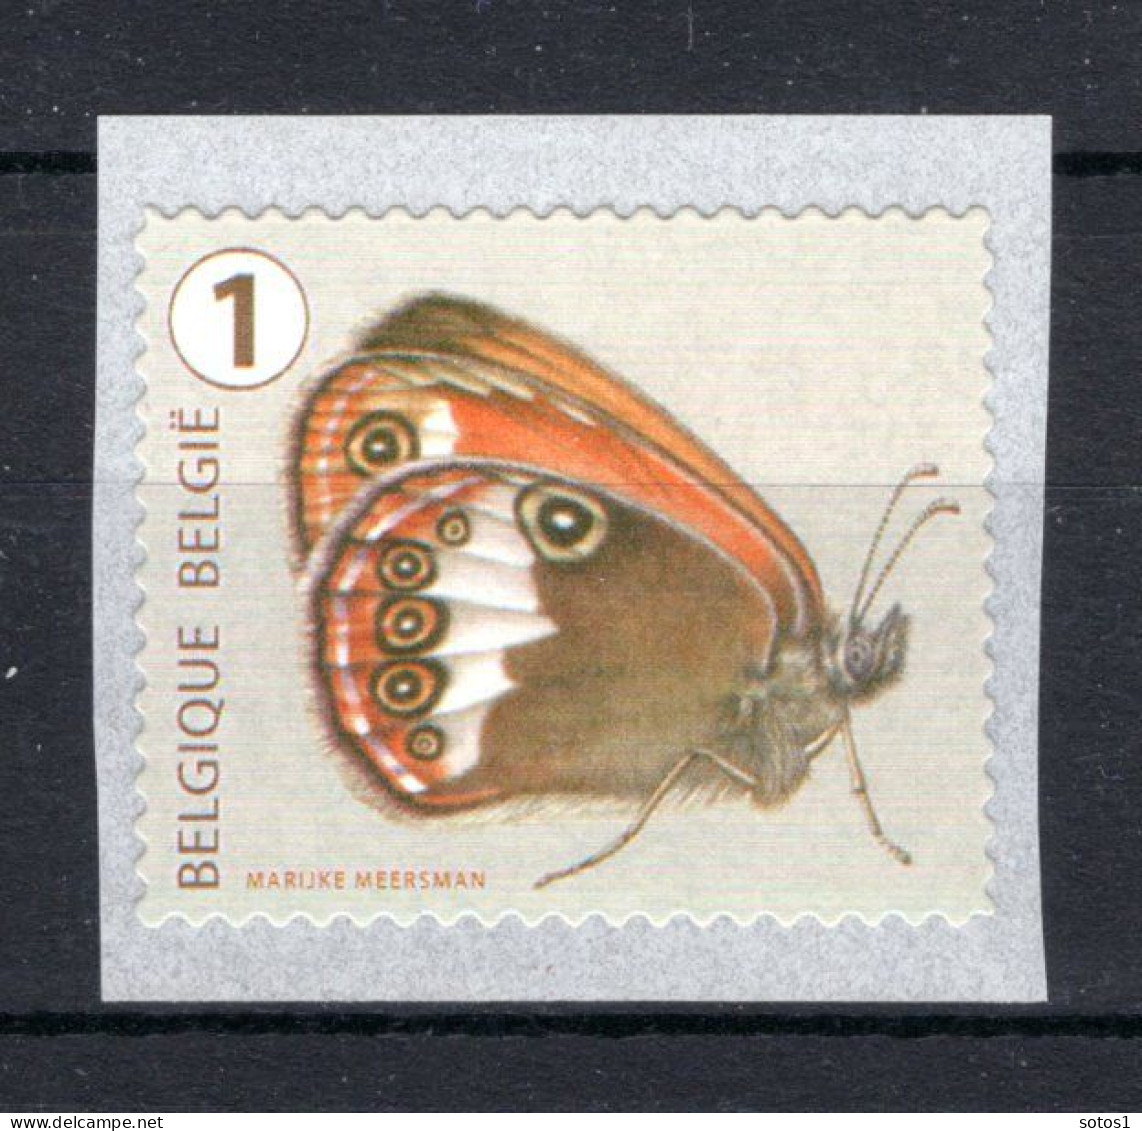 4459 MNH 2014 - Rolzegel Vlinders Met Nummer 75 - Ungebraucht